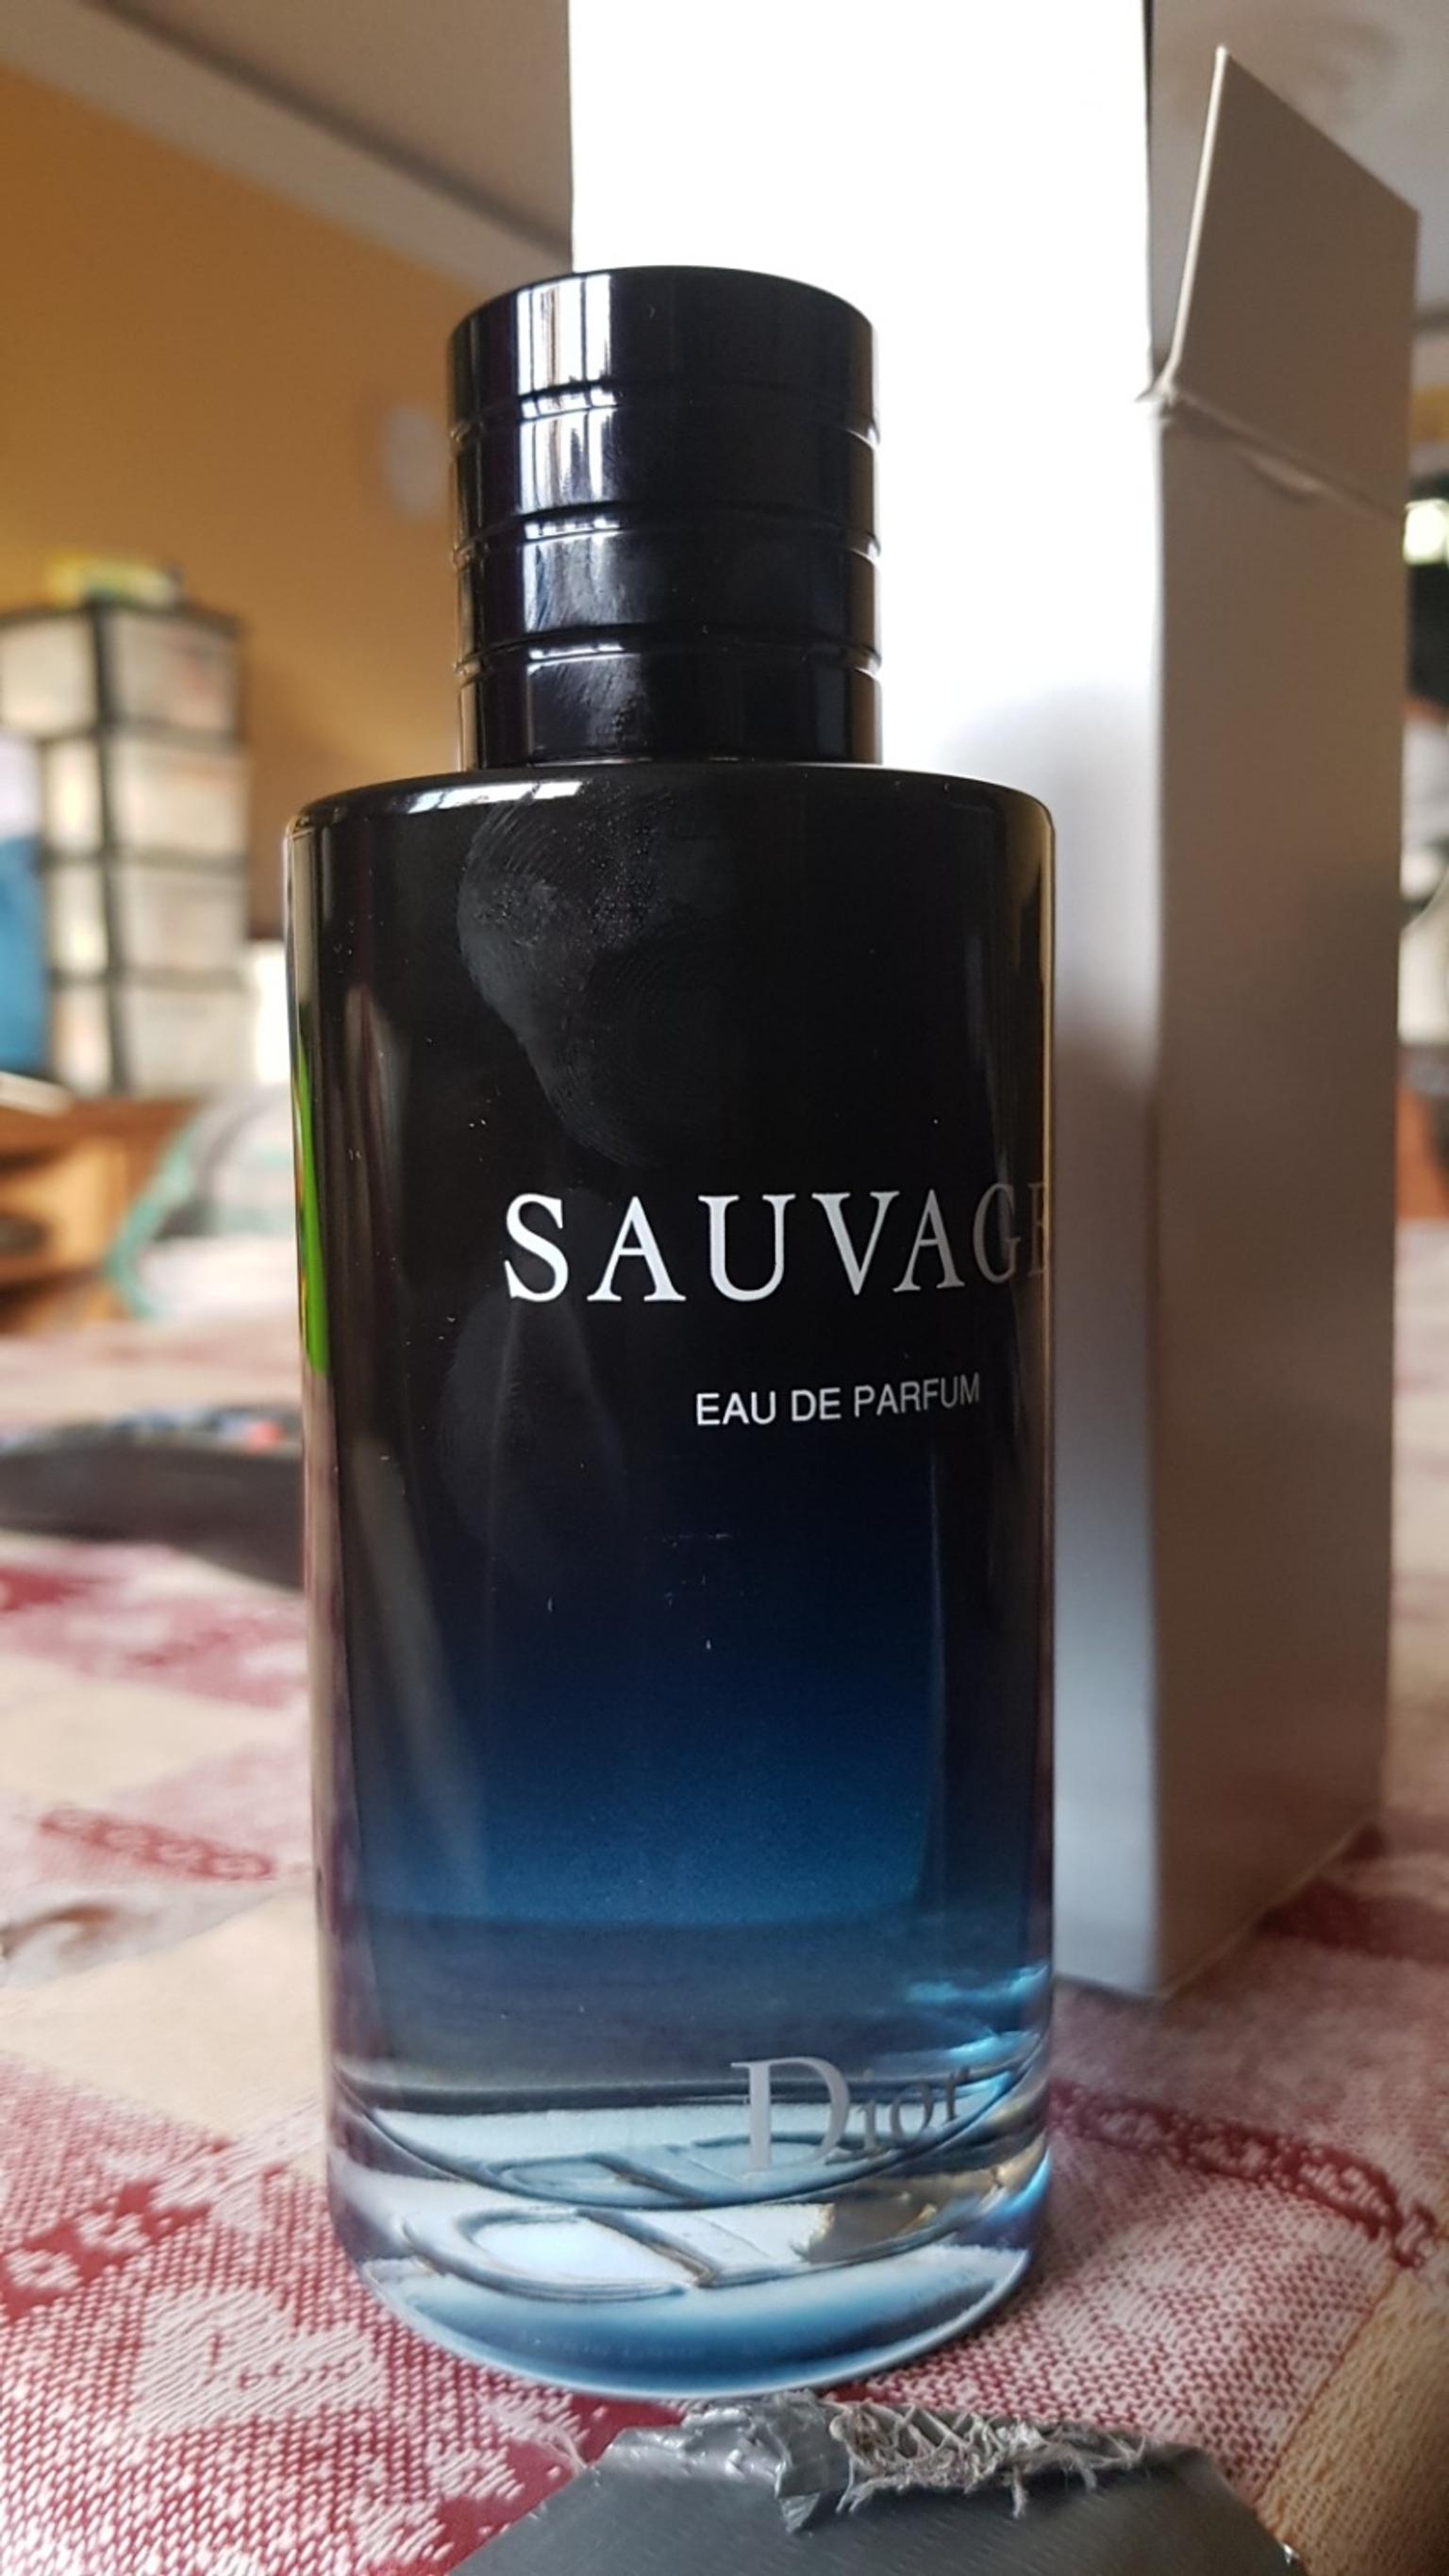 dior sauvage parfum 200 ml